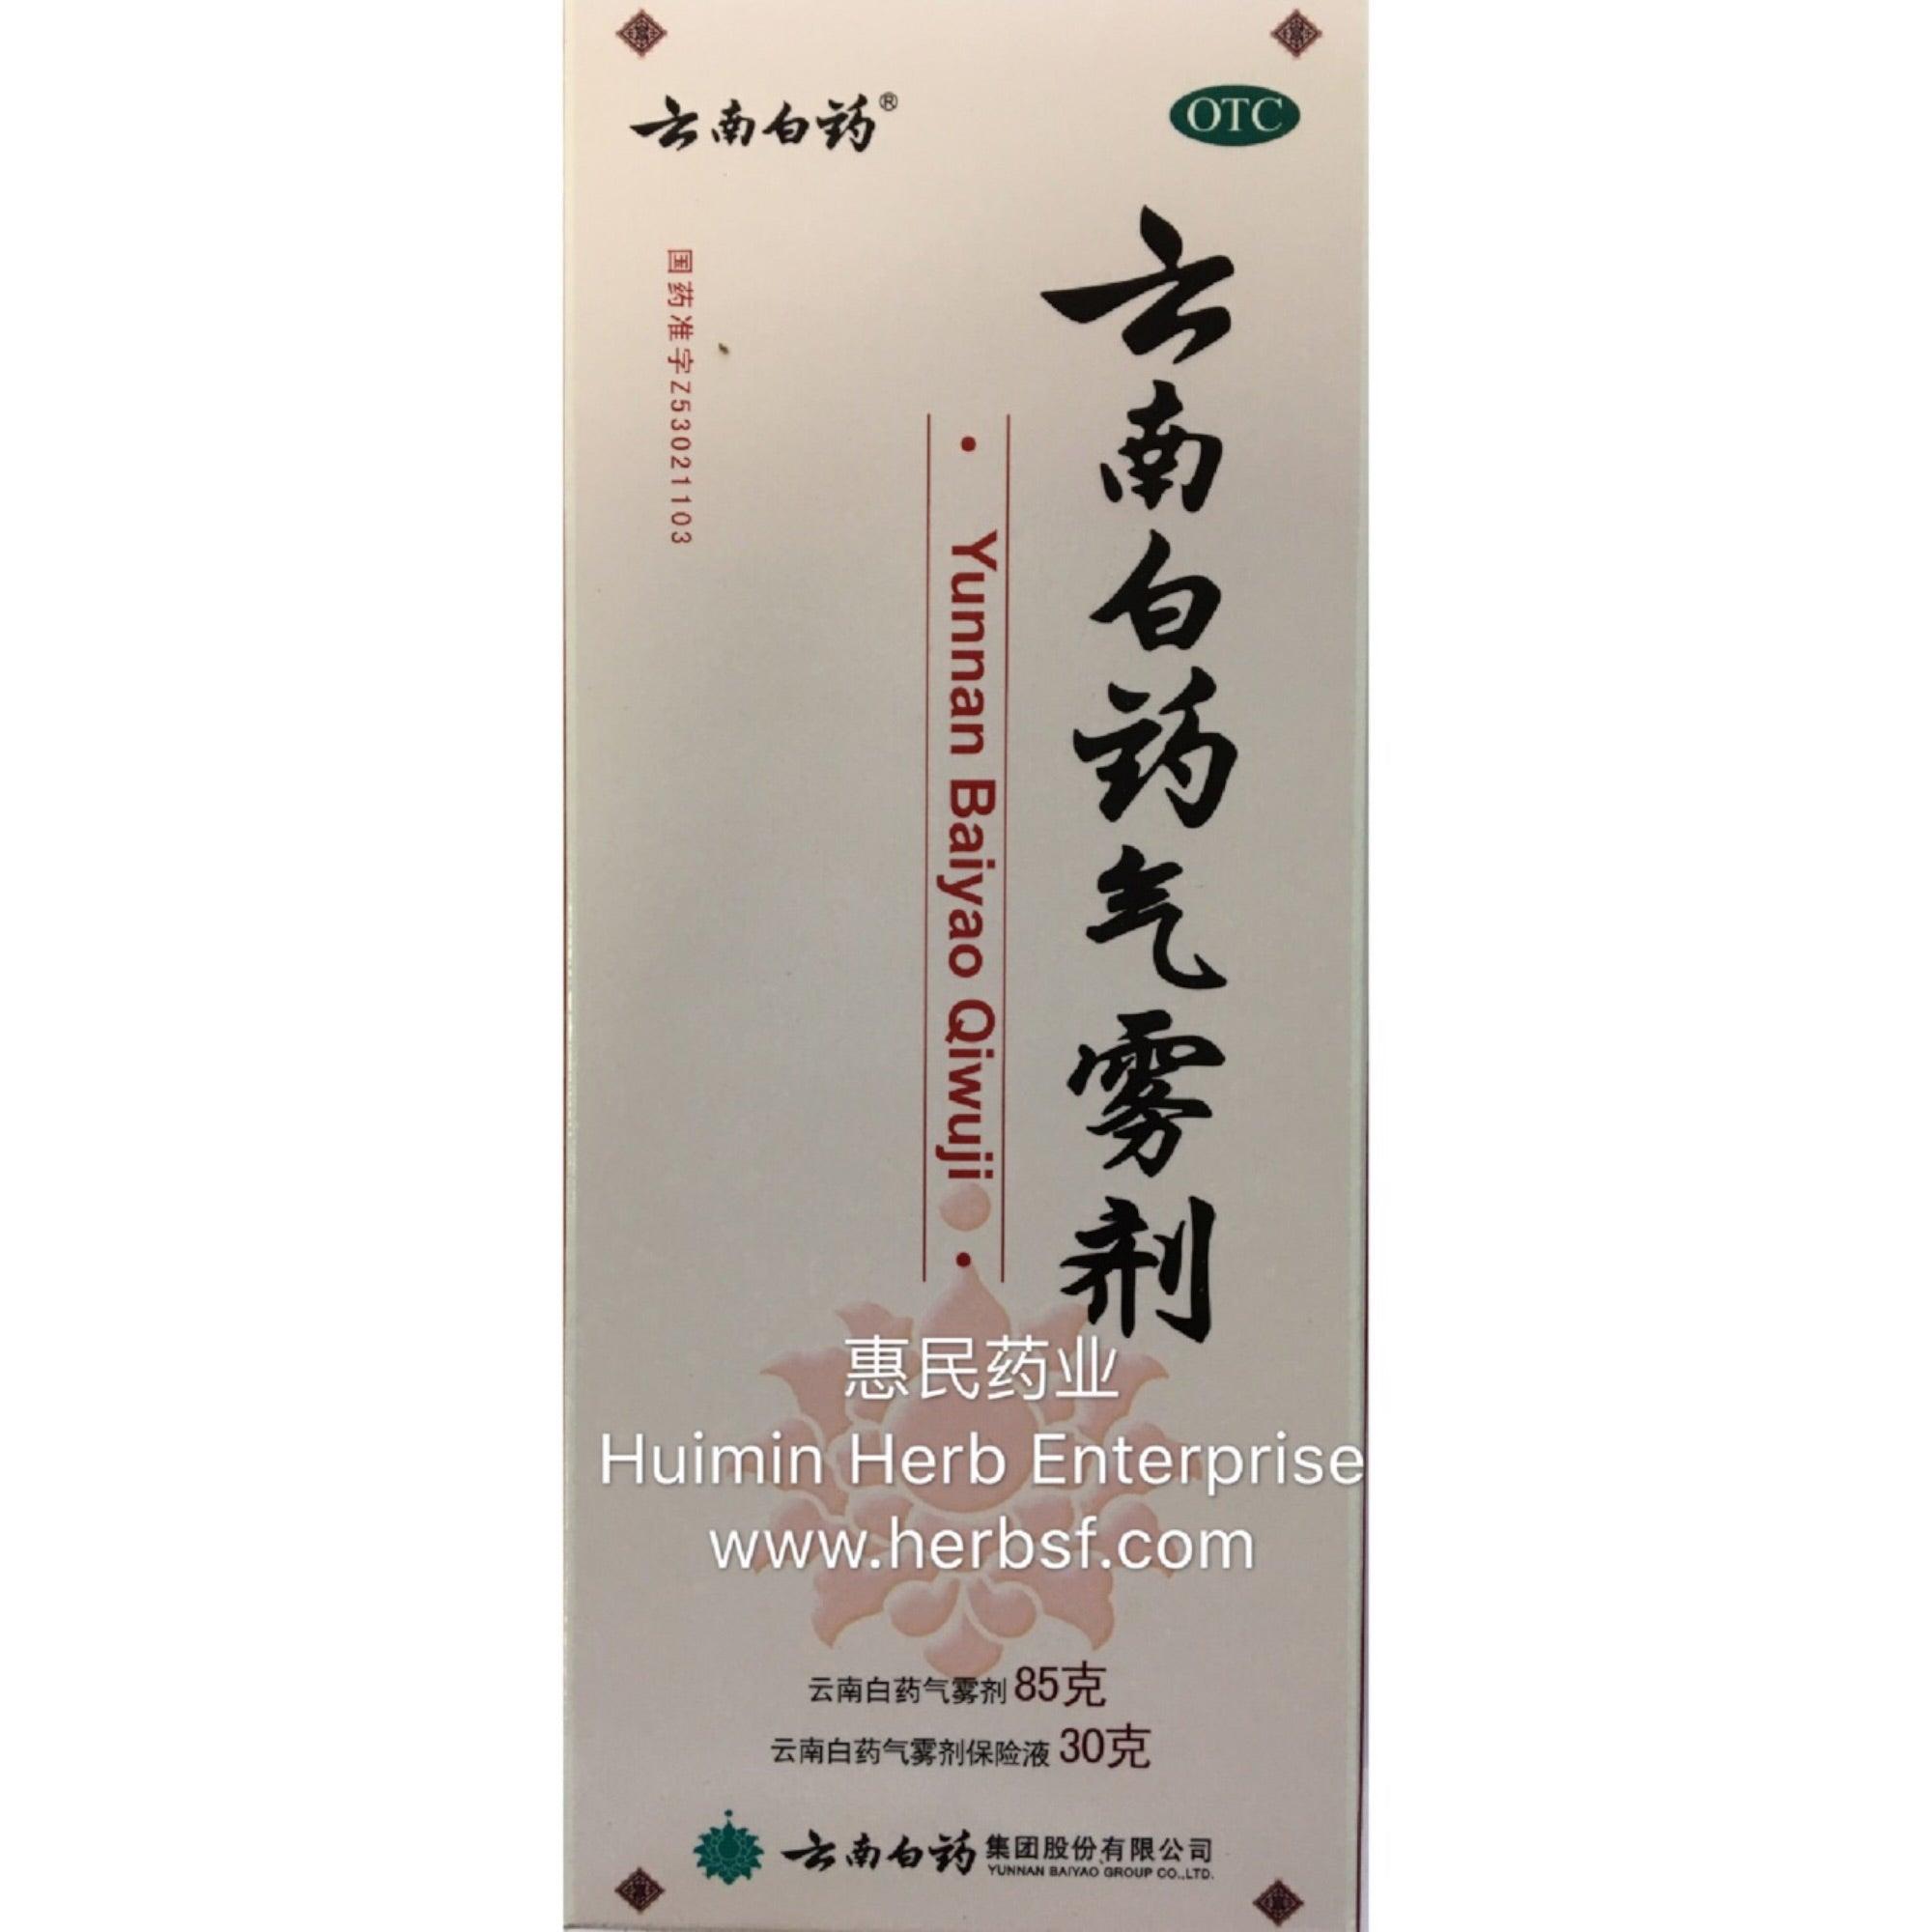 Yunnan Baiyao Qiwuji Pain Relief Spray 85g+30g